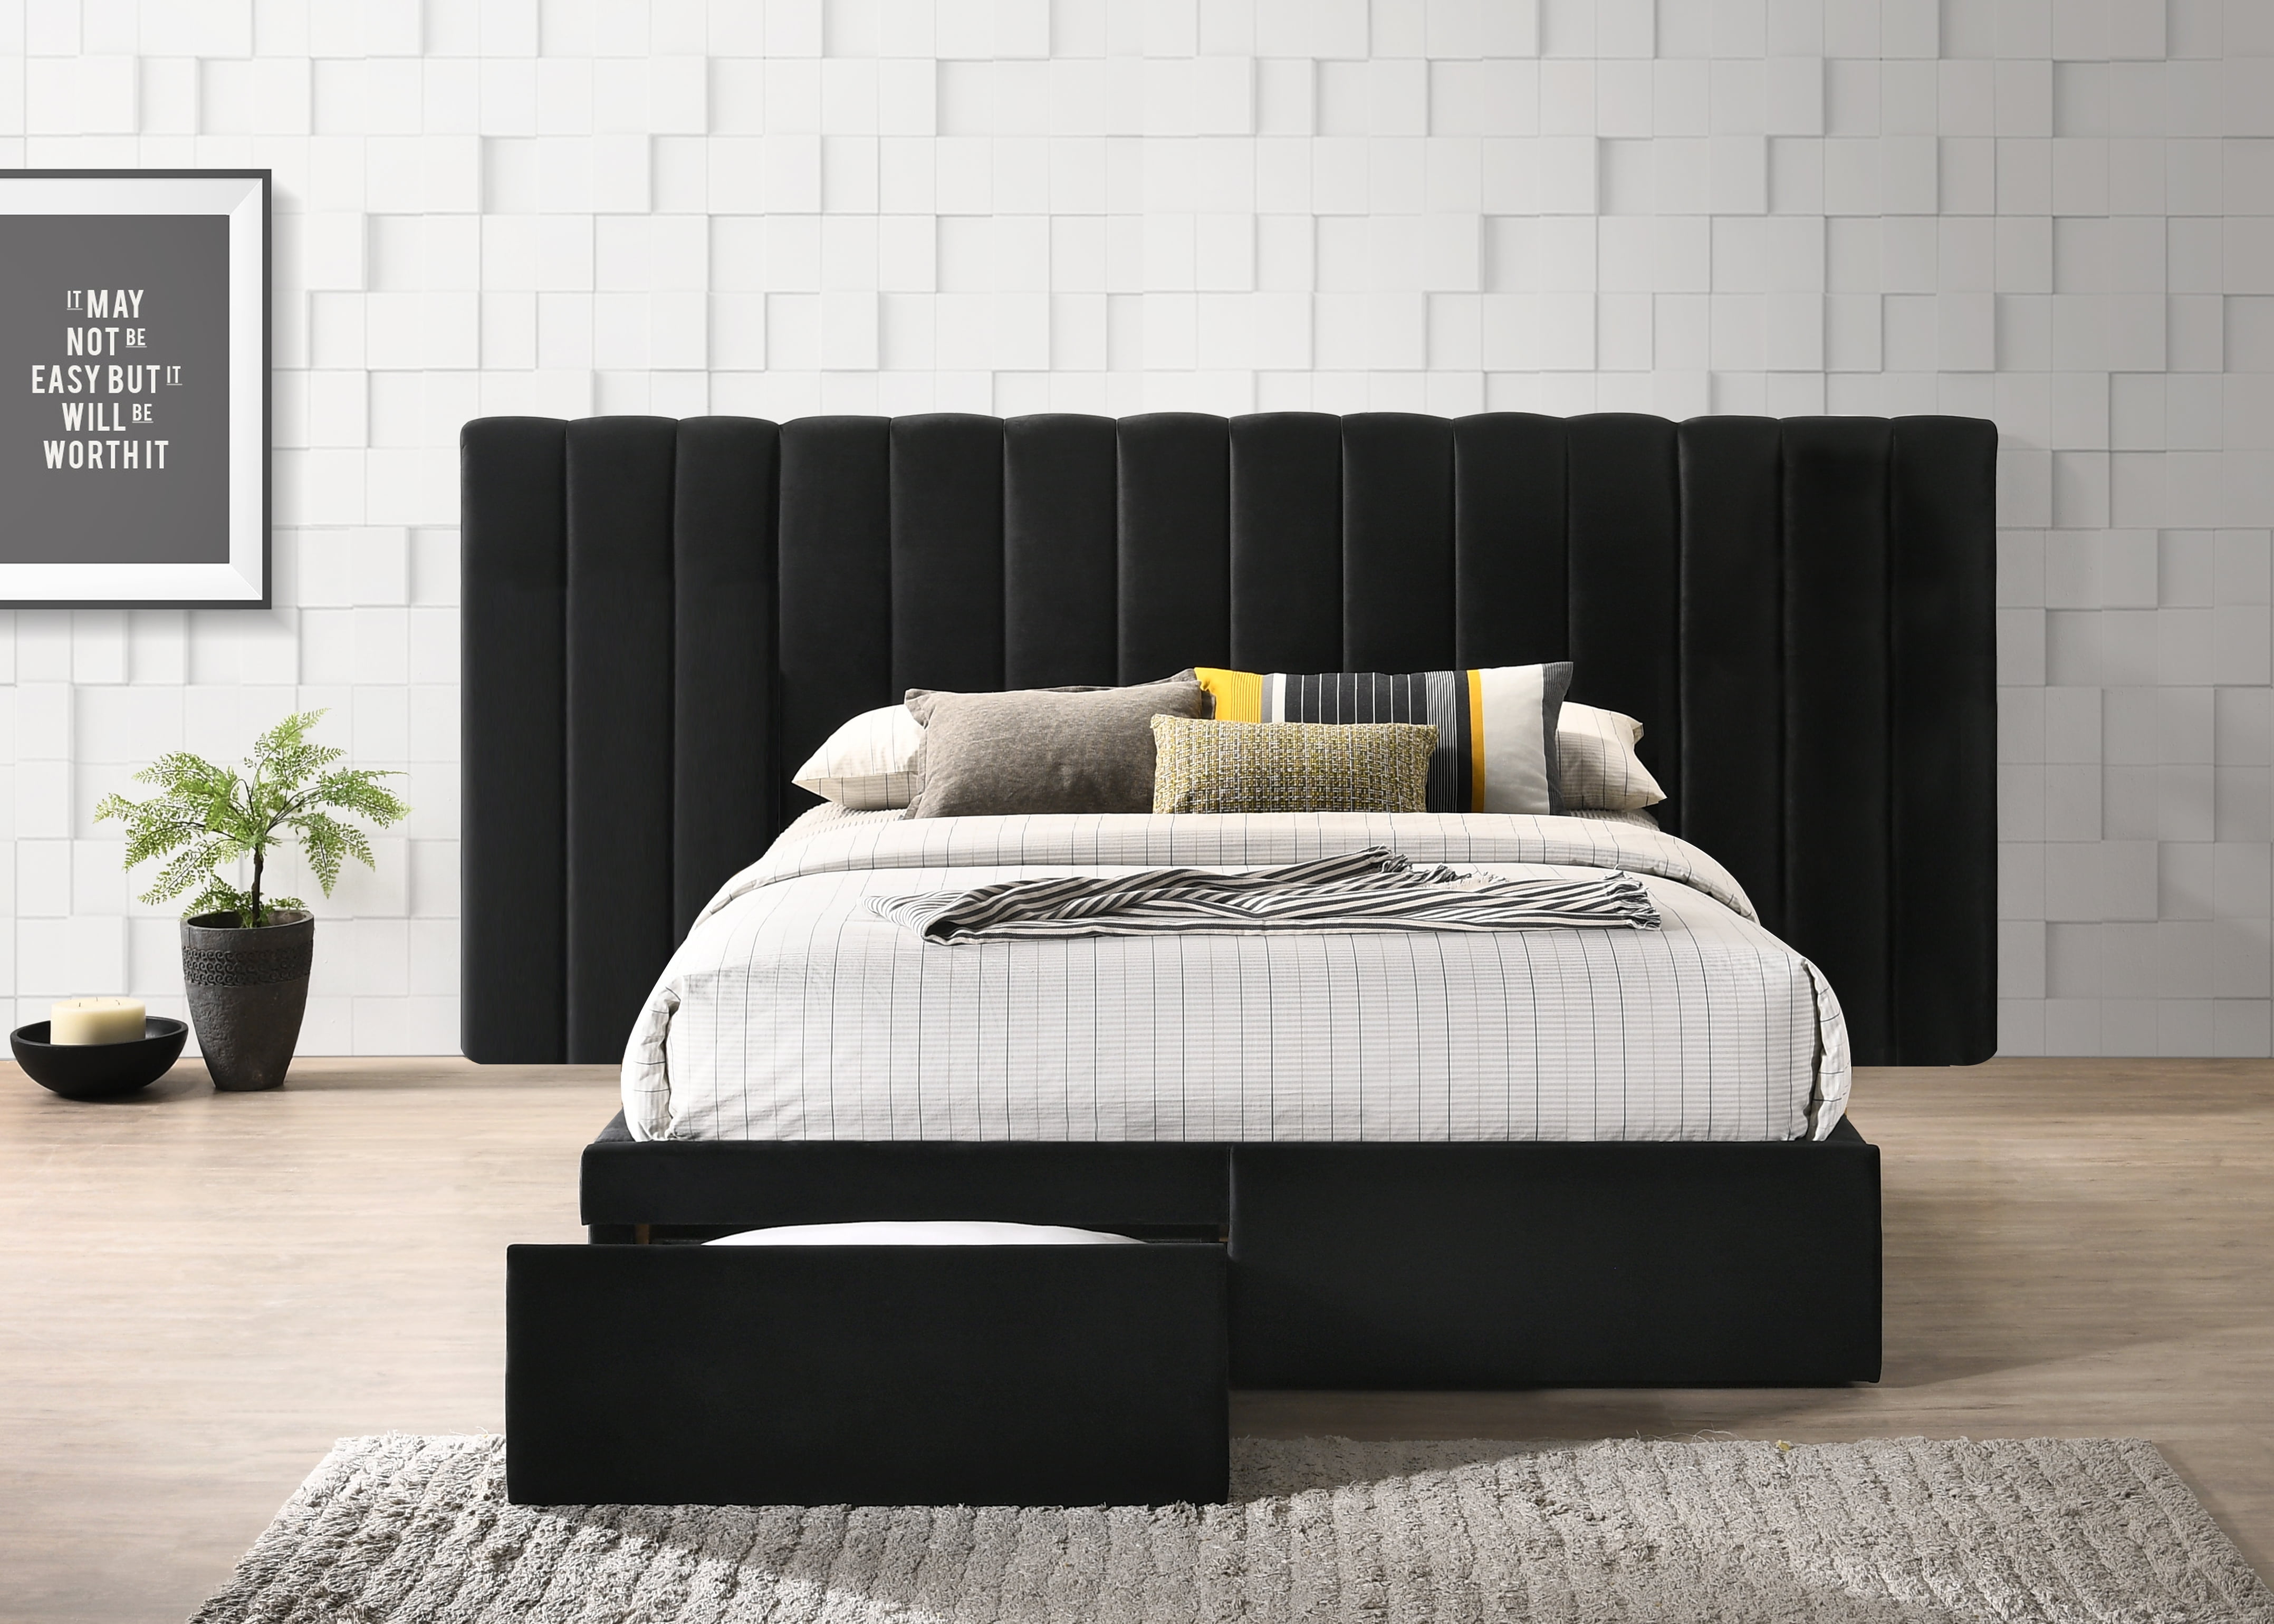 King Size Black Bed Frame with Simple Modern Design